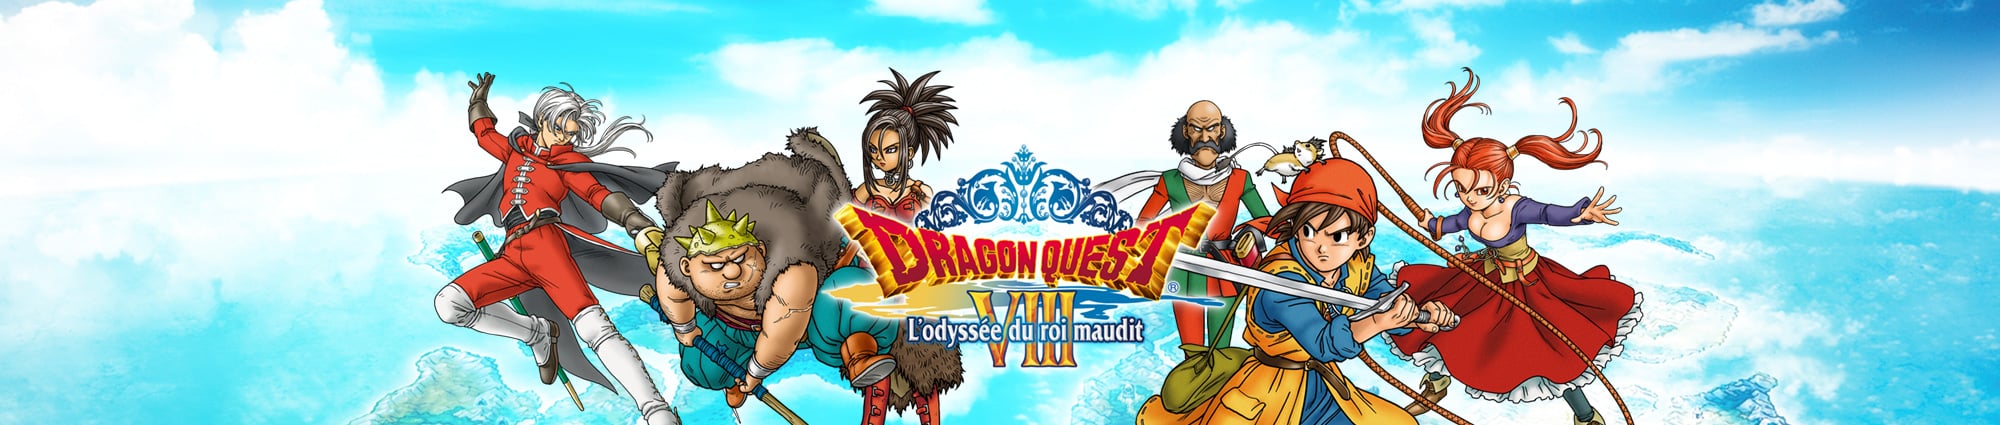 Dragon Quest VIII (Nintendo 3DS)